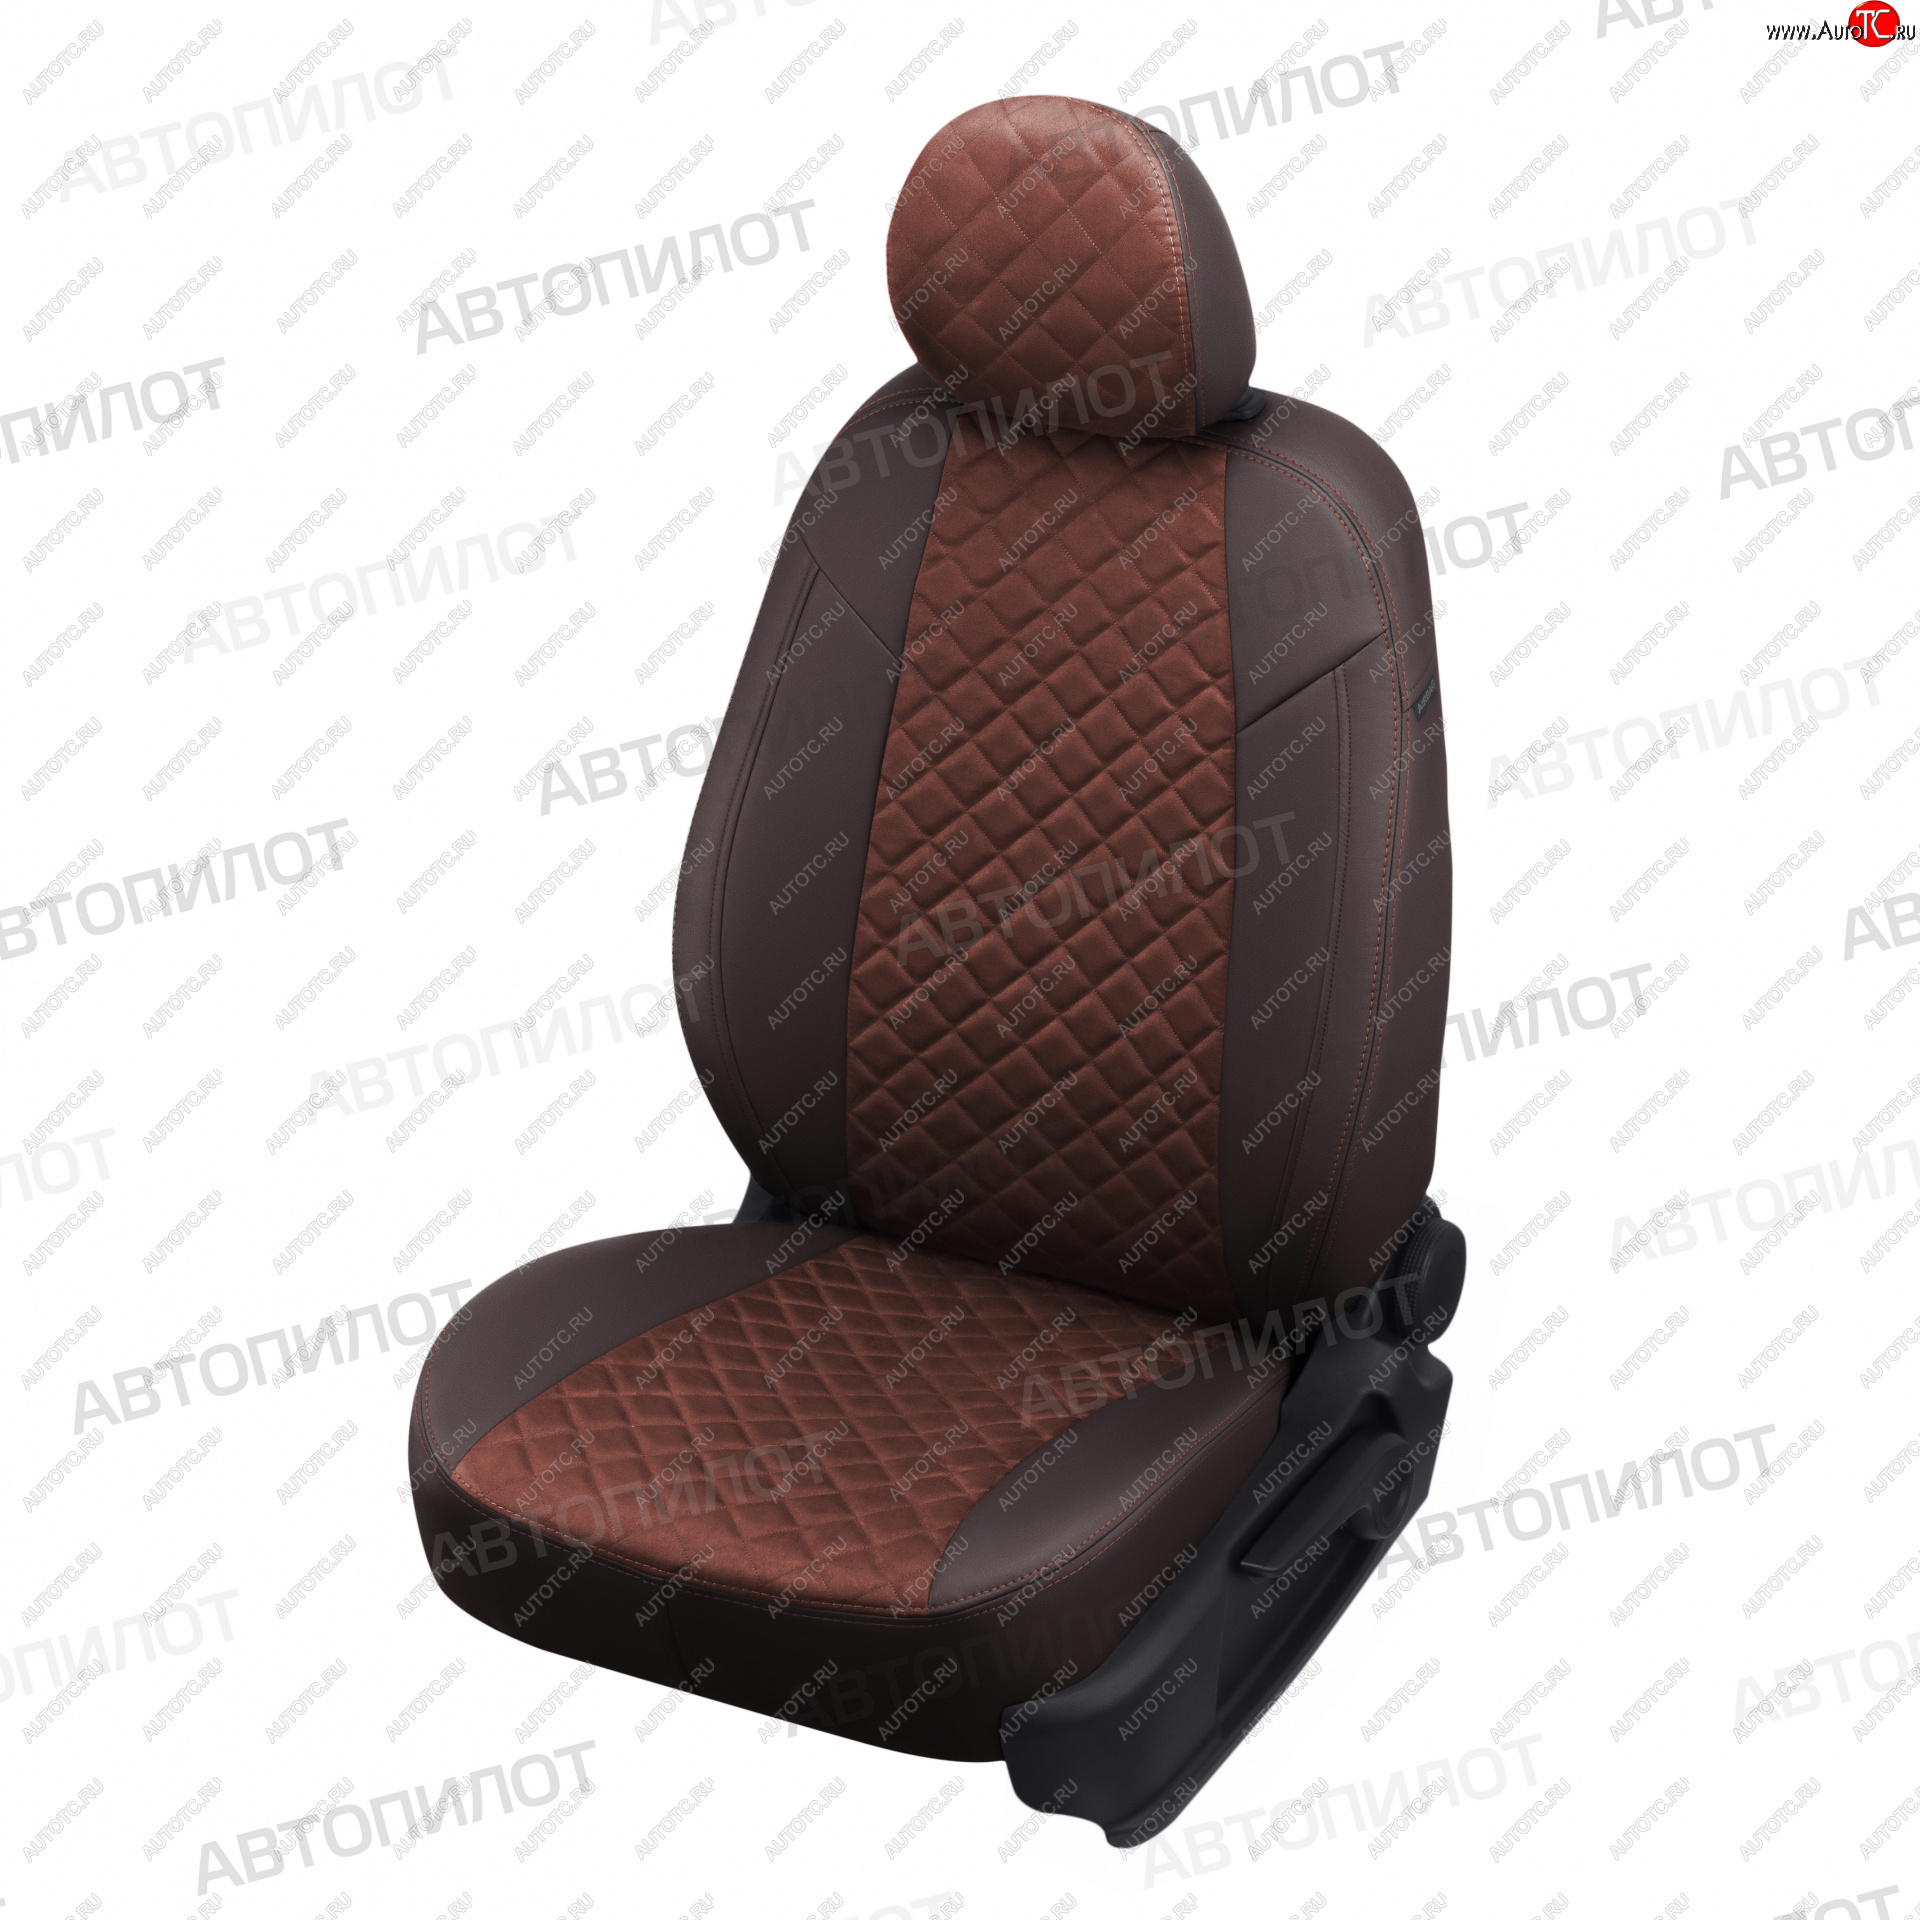 13 999 р. Чехлы сидений (экокожа/алькантара) Автопилот Ромб  Nissan Micra  3 (2002-2010) (шоколад)